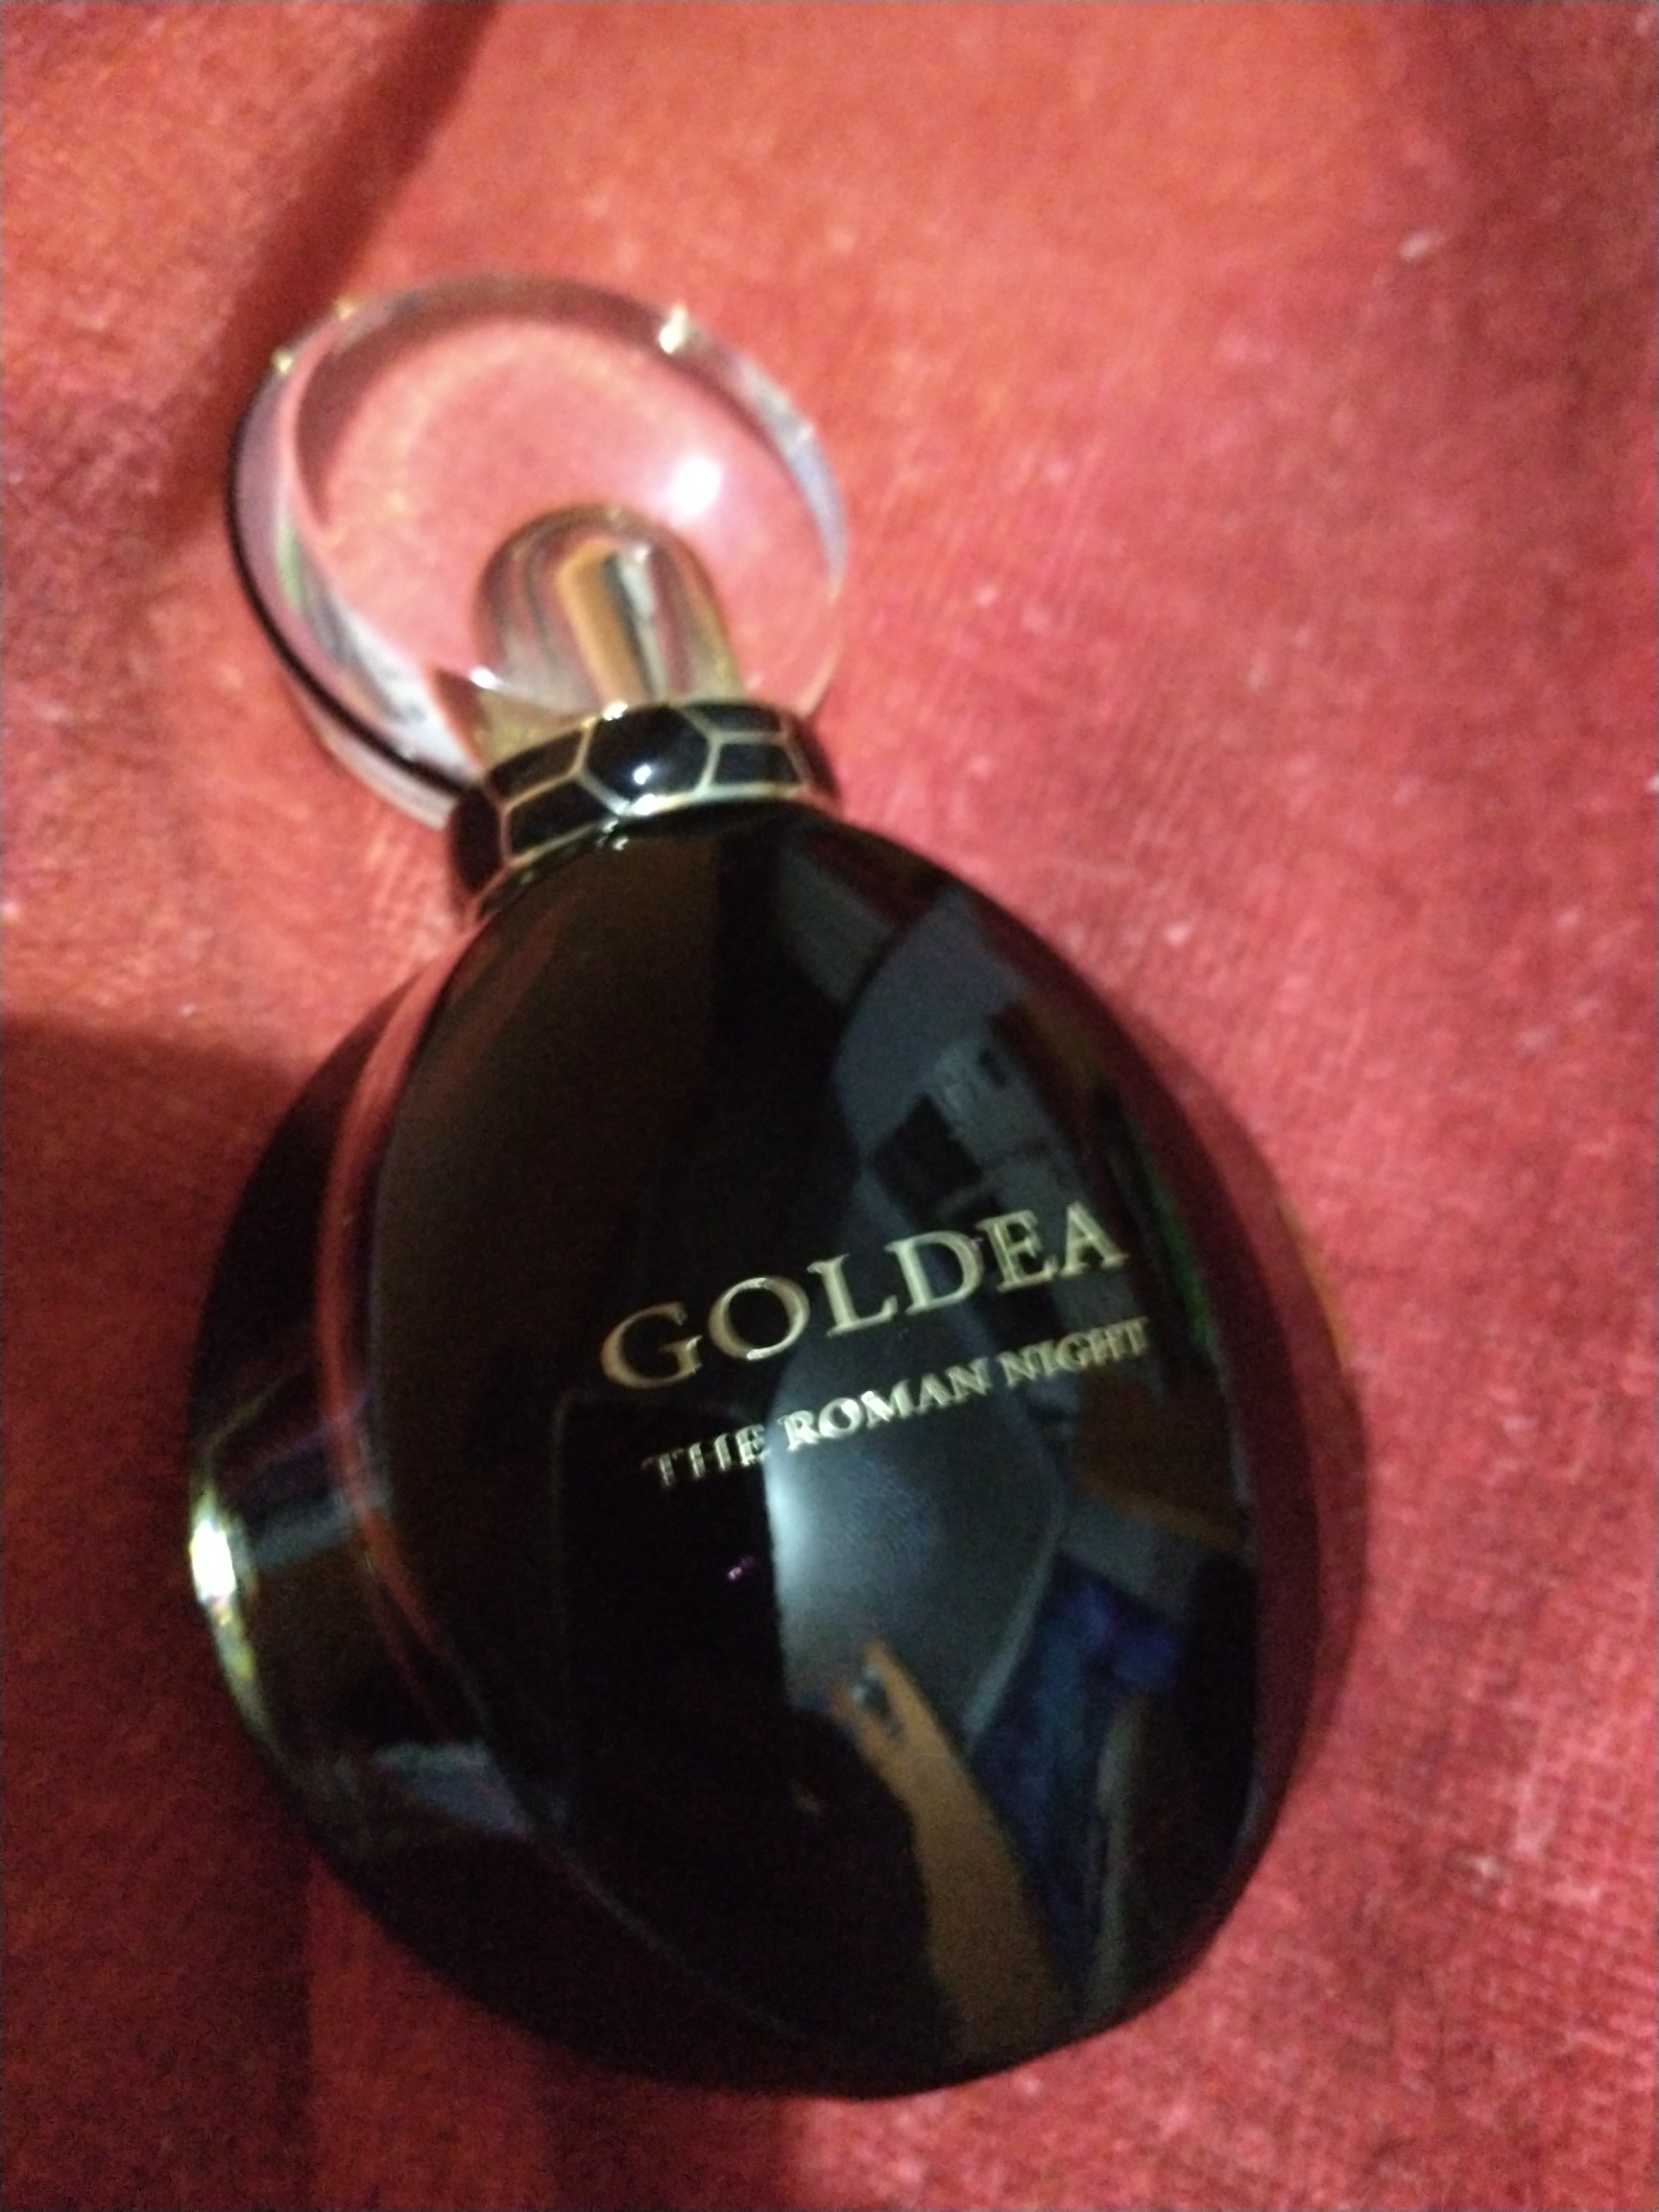 salud y belleza - Perfume Goldea Bulgari